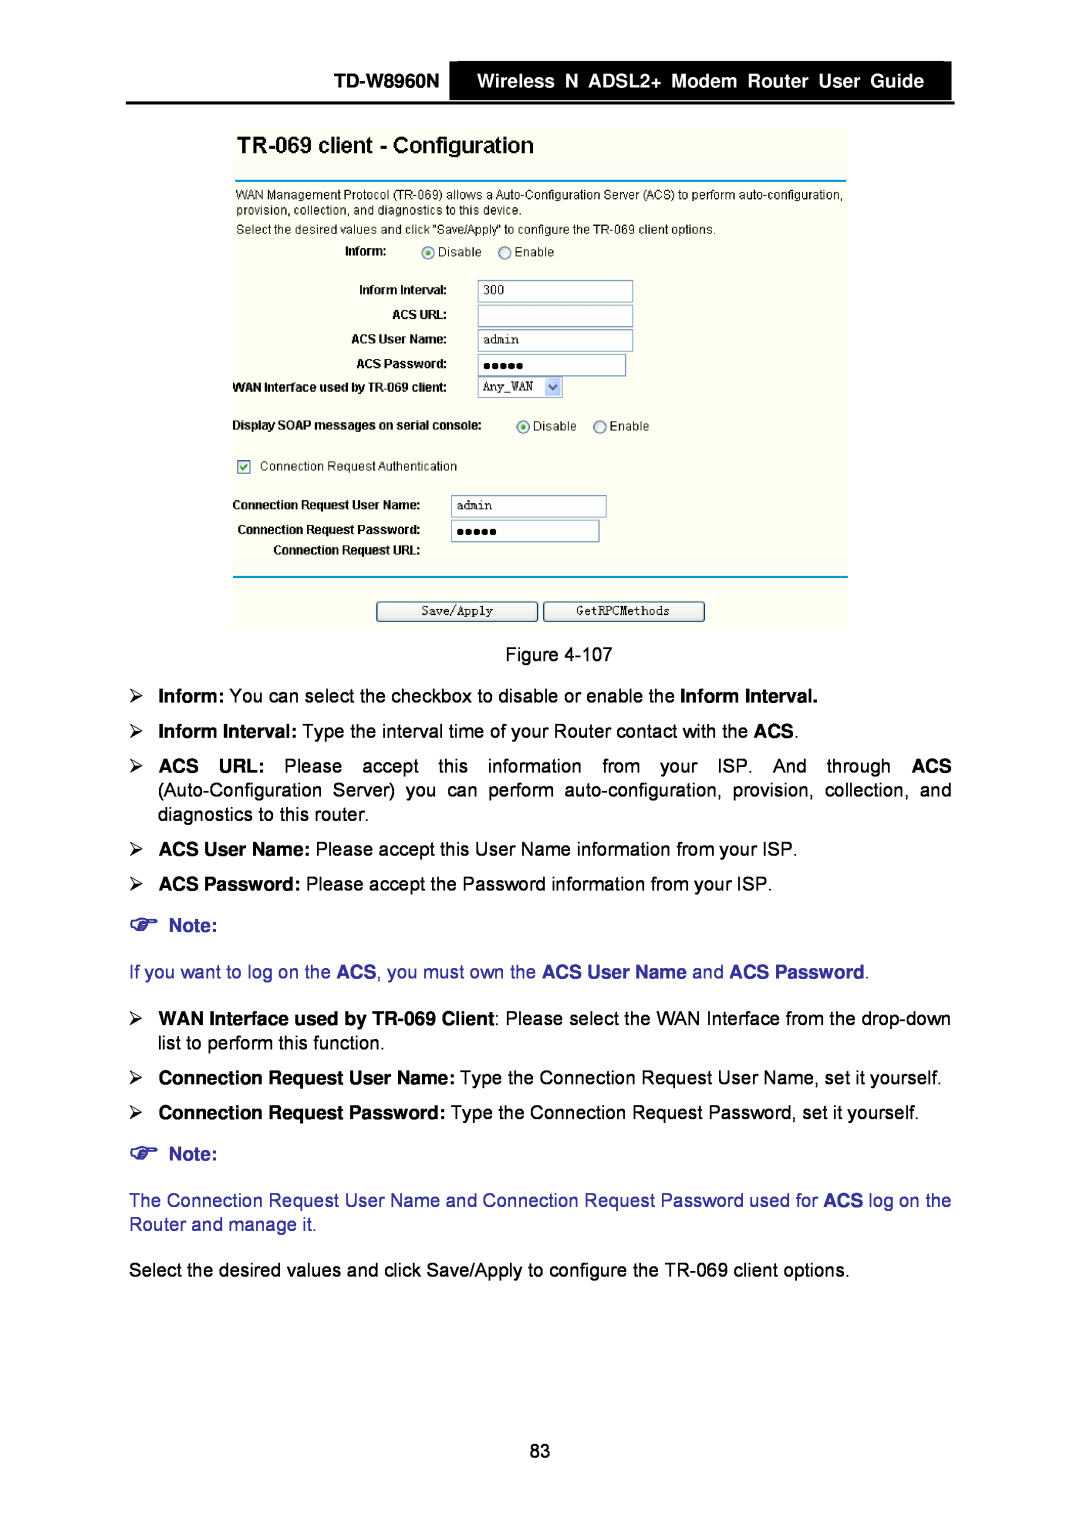 TP-Link manual TD-W8960N Wireless N ADSL2+ Modem Router User Guide 